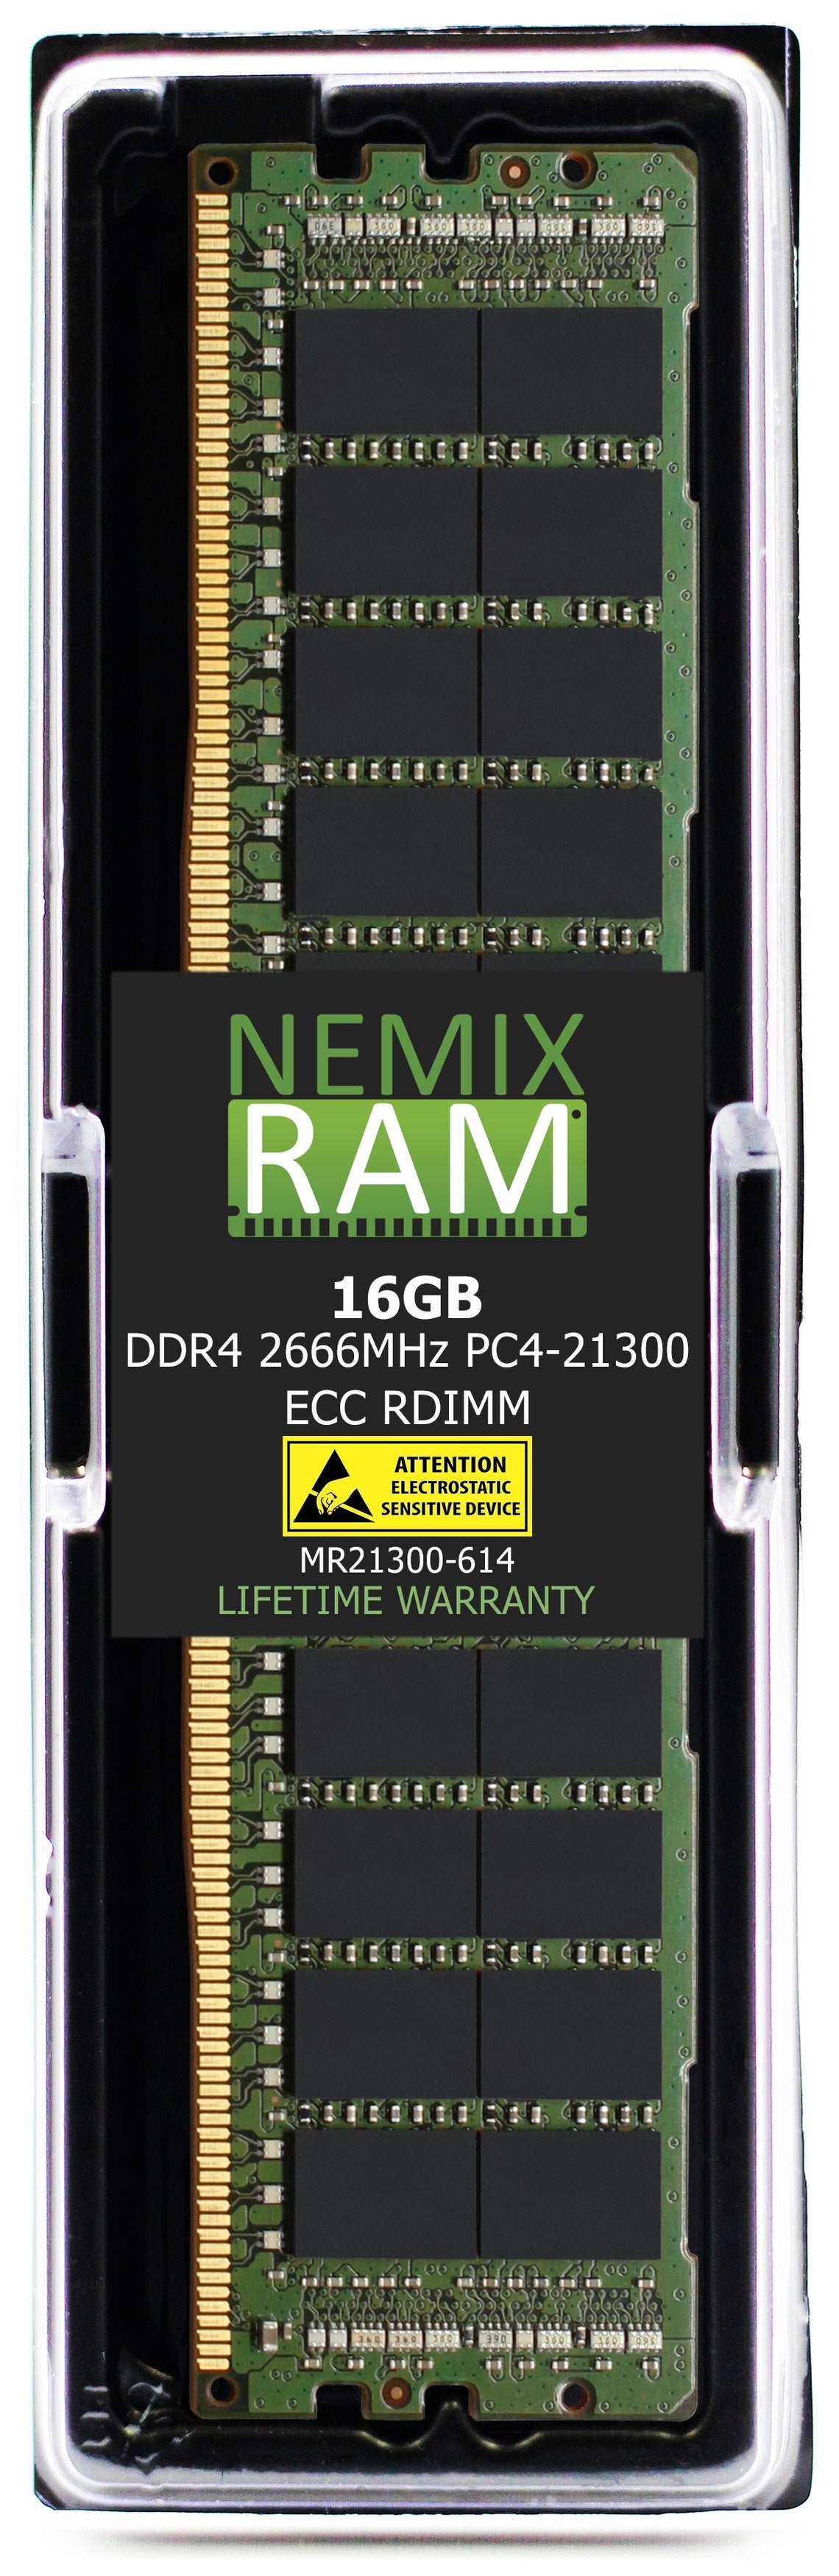 16GB DDR4 2666MHZ PC4-21300 RDIMM Compatible with Supermicro MEM-DR416L-SL04-ER26